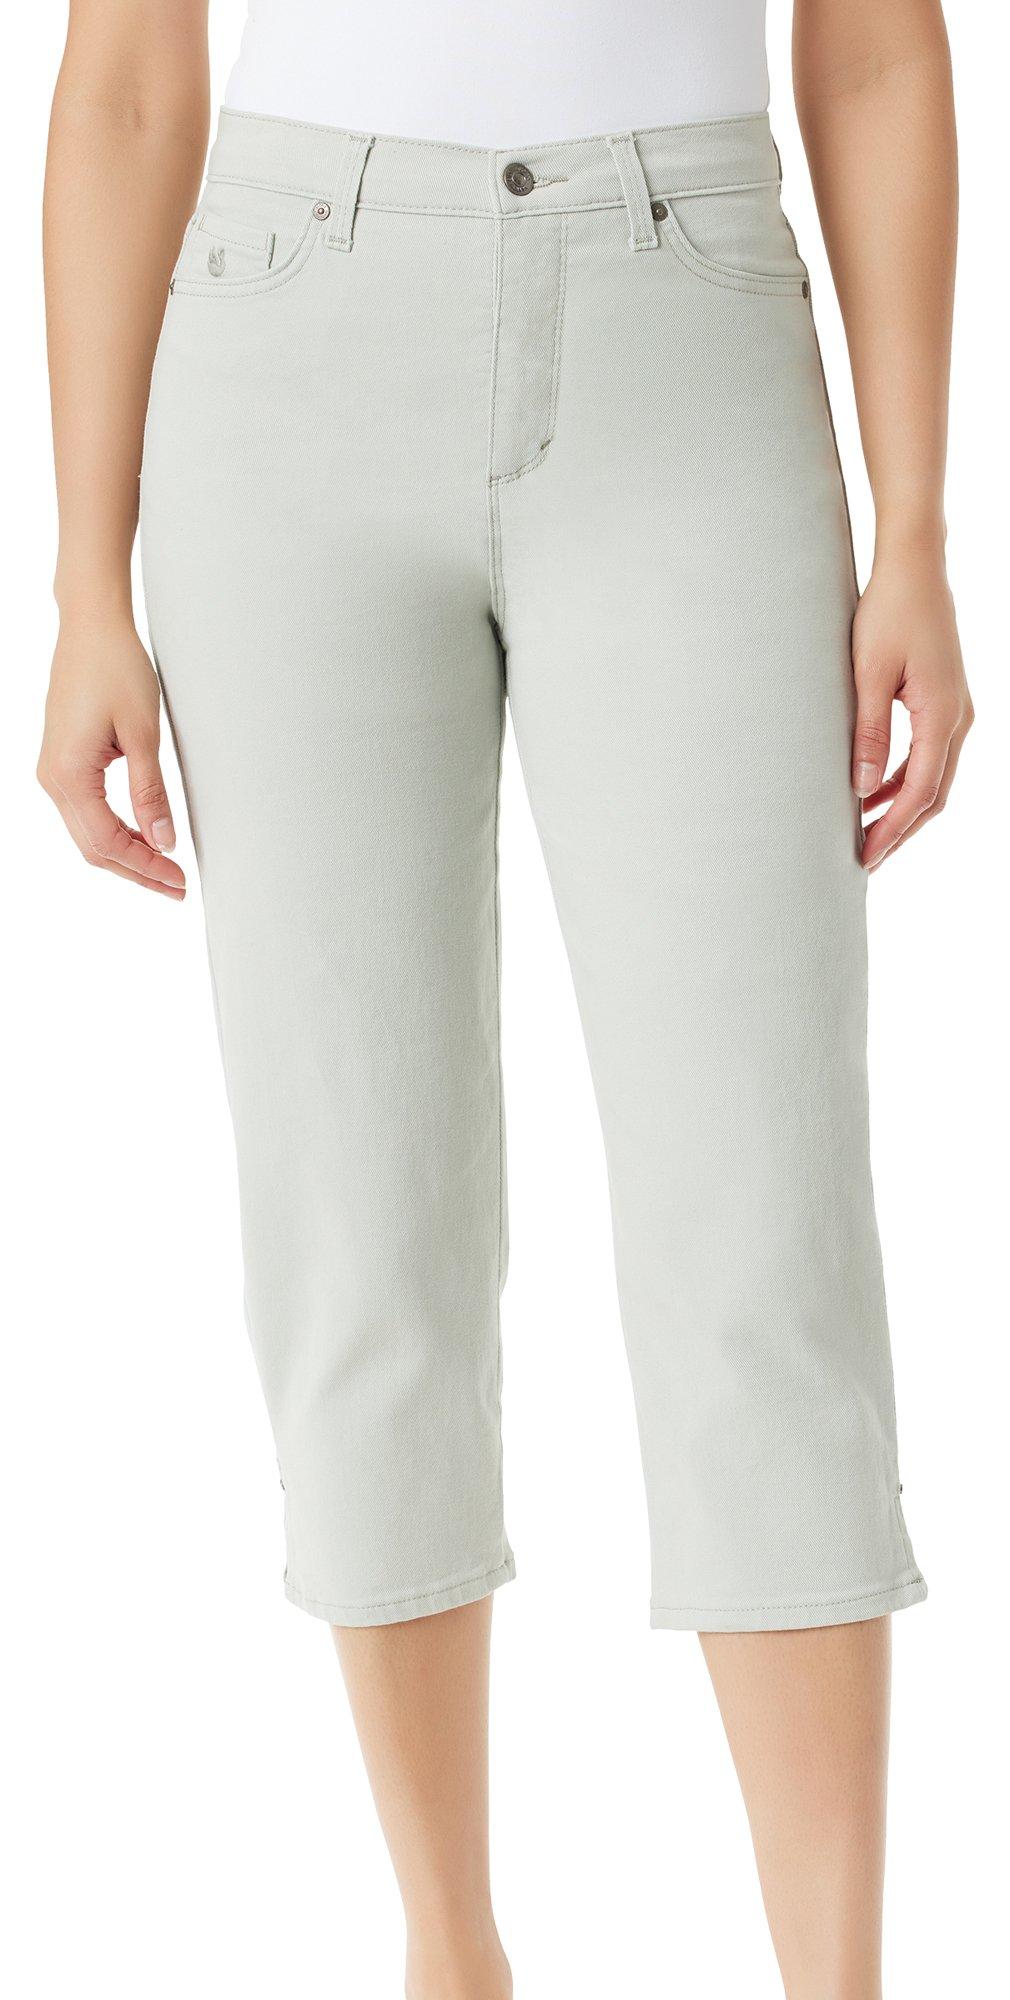 Gloria Vanderbilt Women's Plus Size Amanda Capri Pants with Rivets